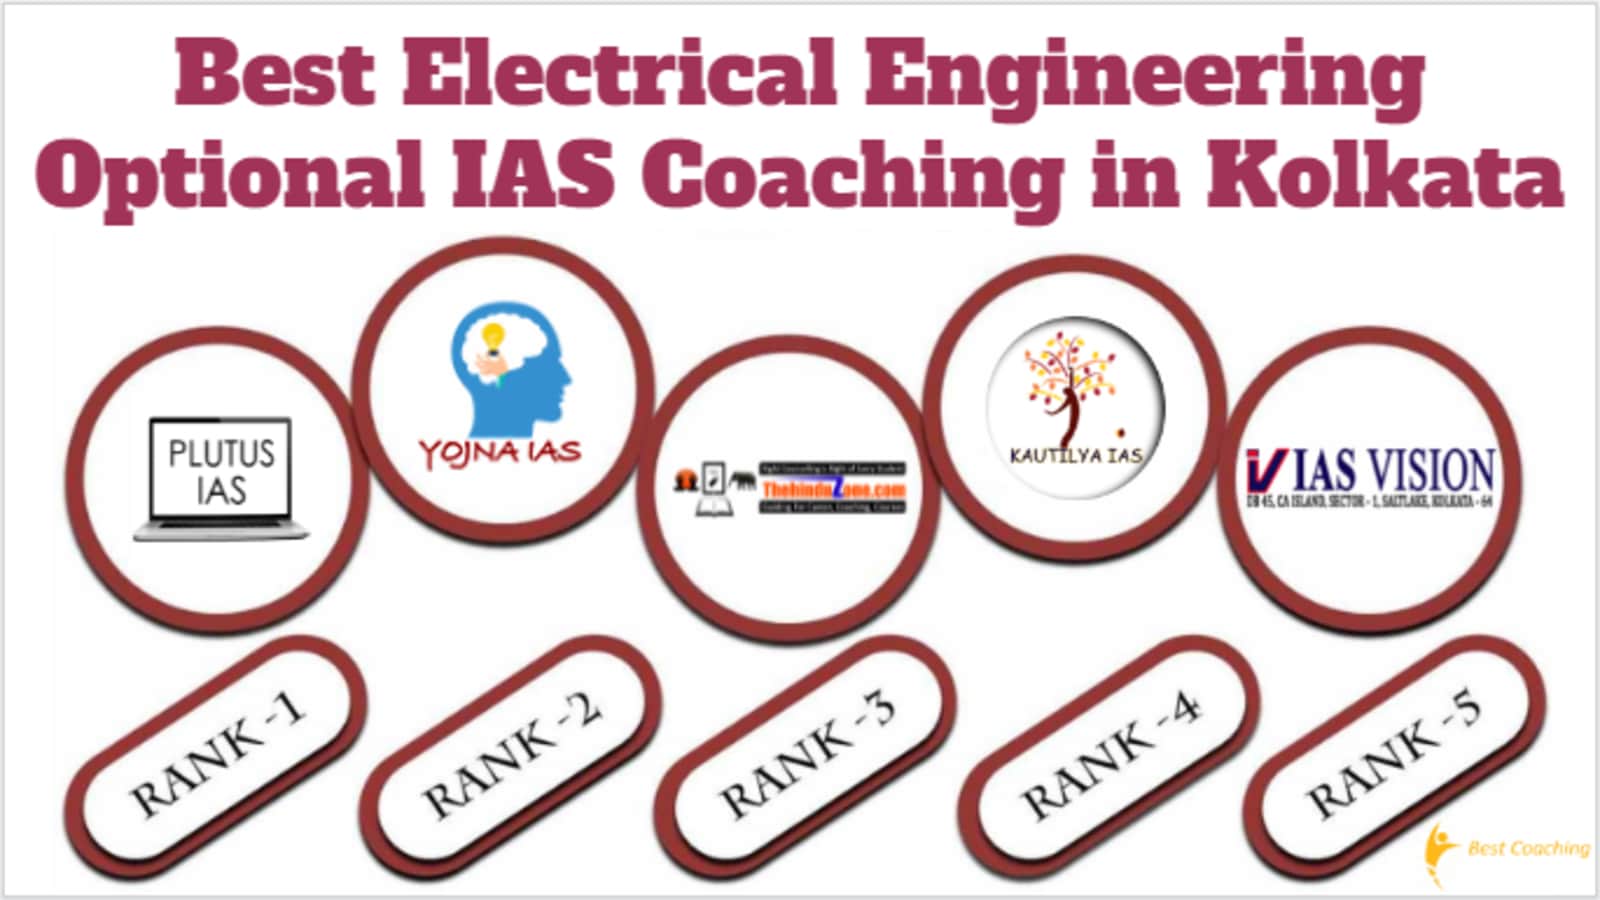 Best Electrical Engineering Optional IAS Coaching in Kolkata